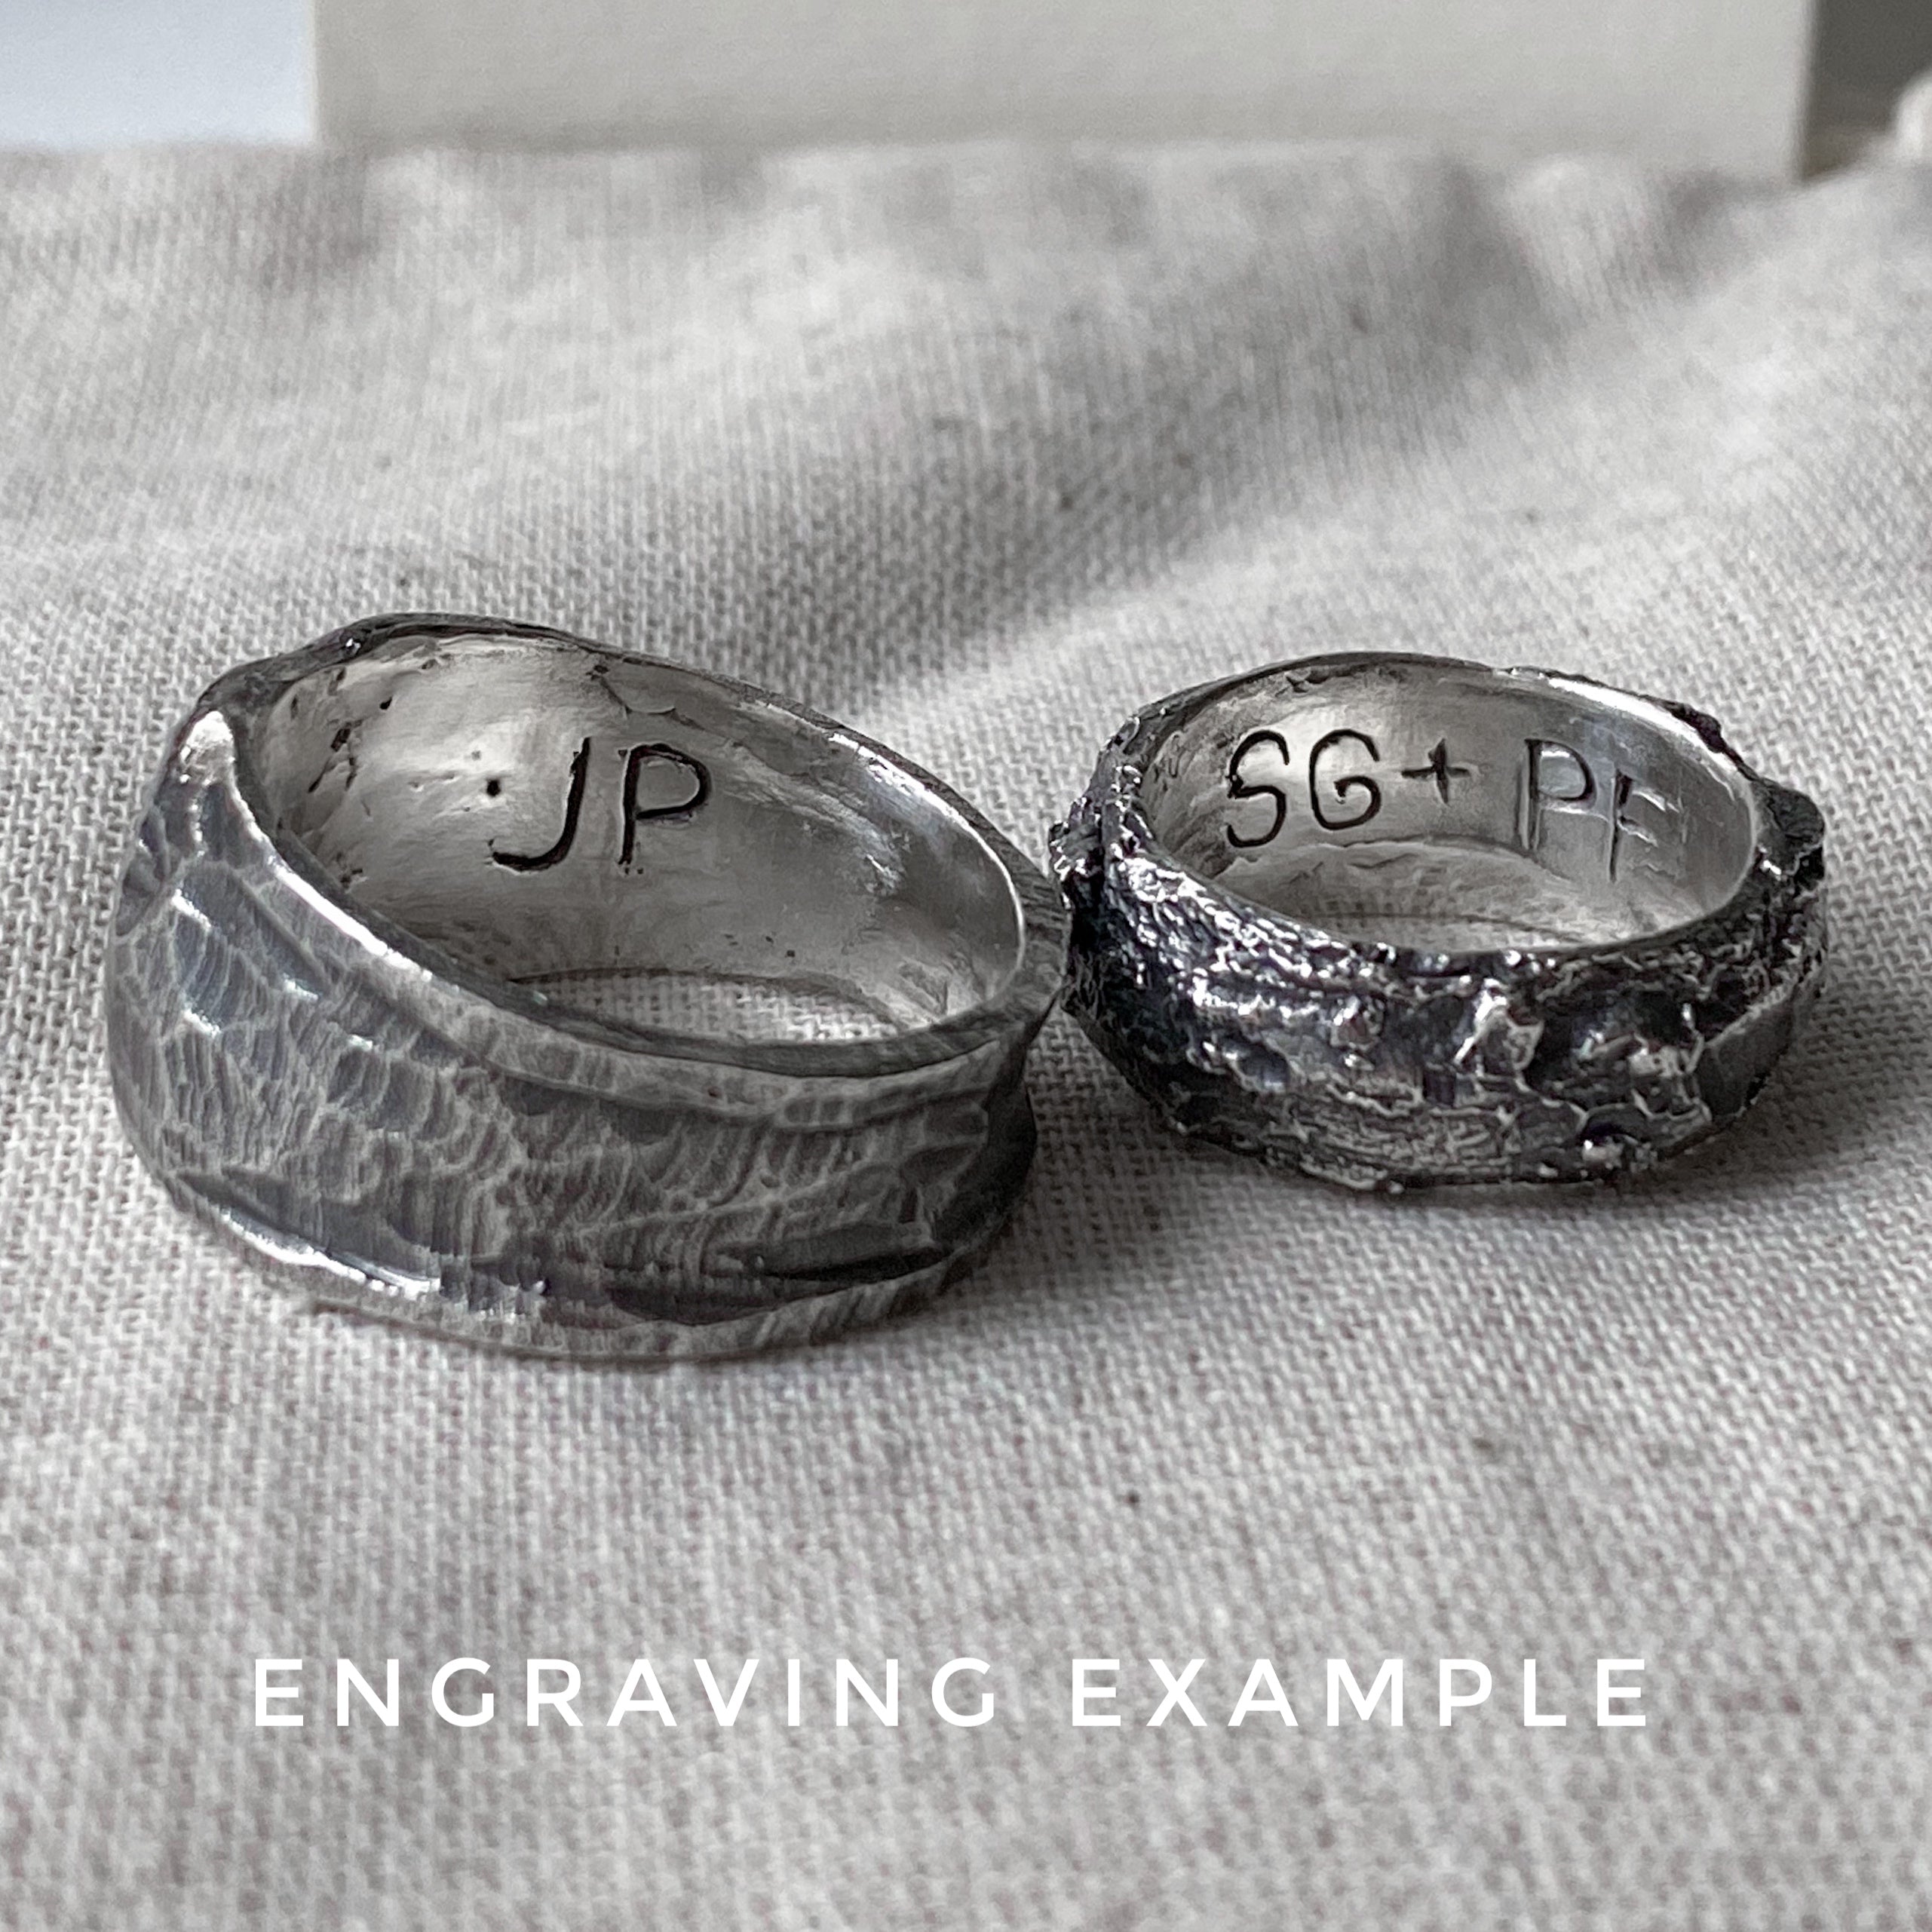 Engagement ring engraving ideas